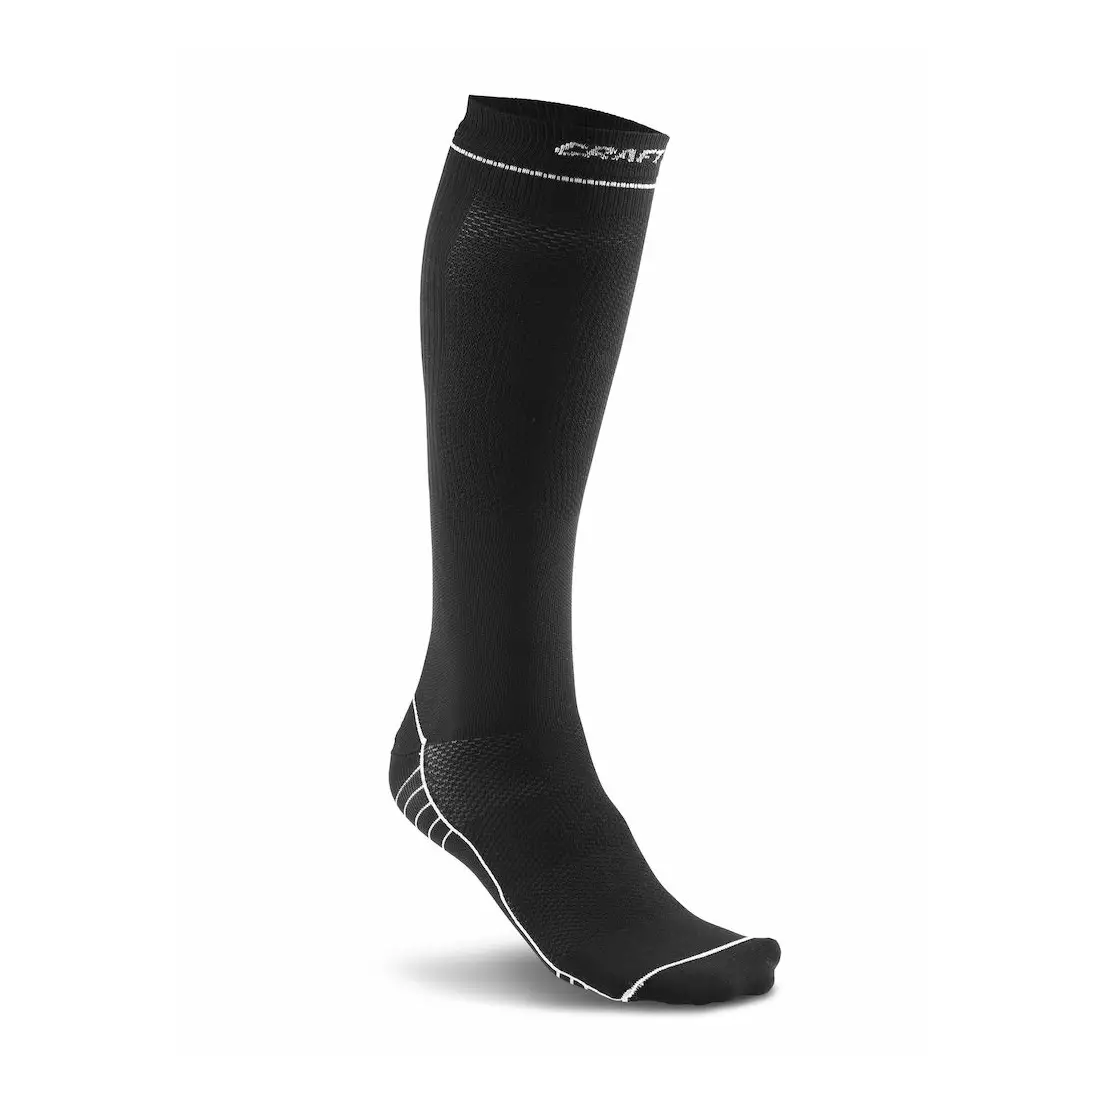 CRAFT kompressziós zokni 1904087-9900 (fekete)